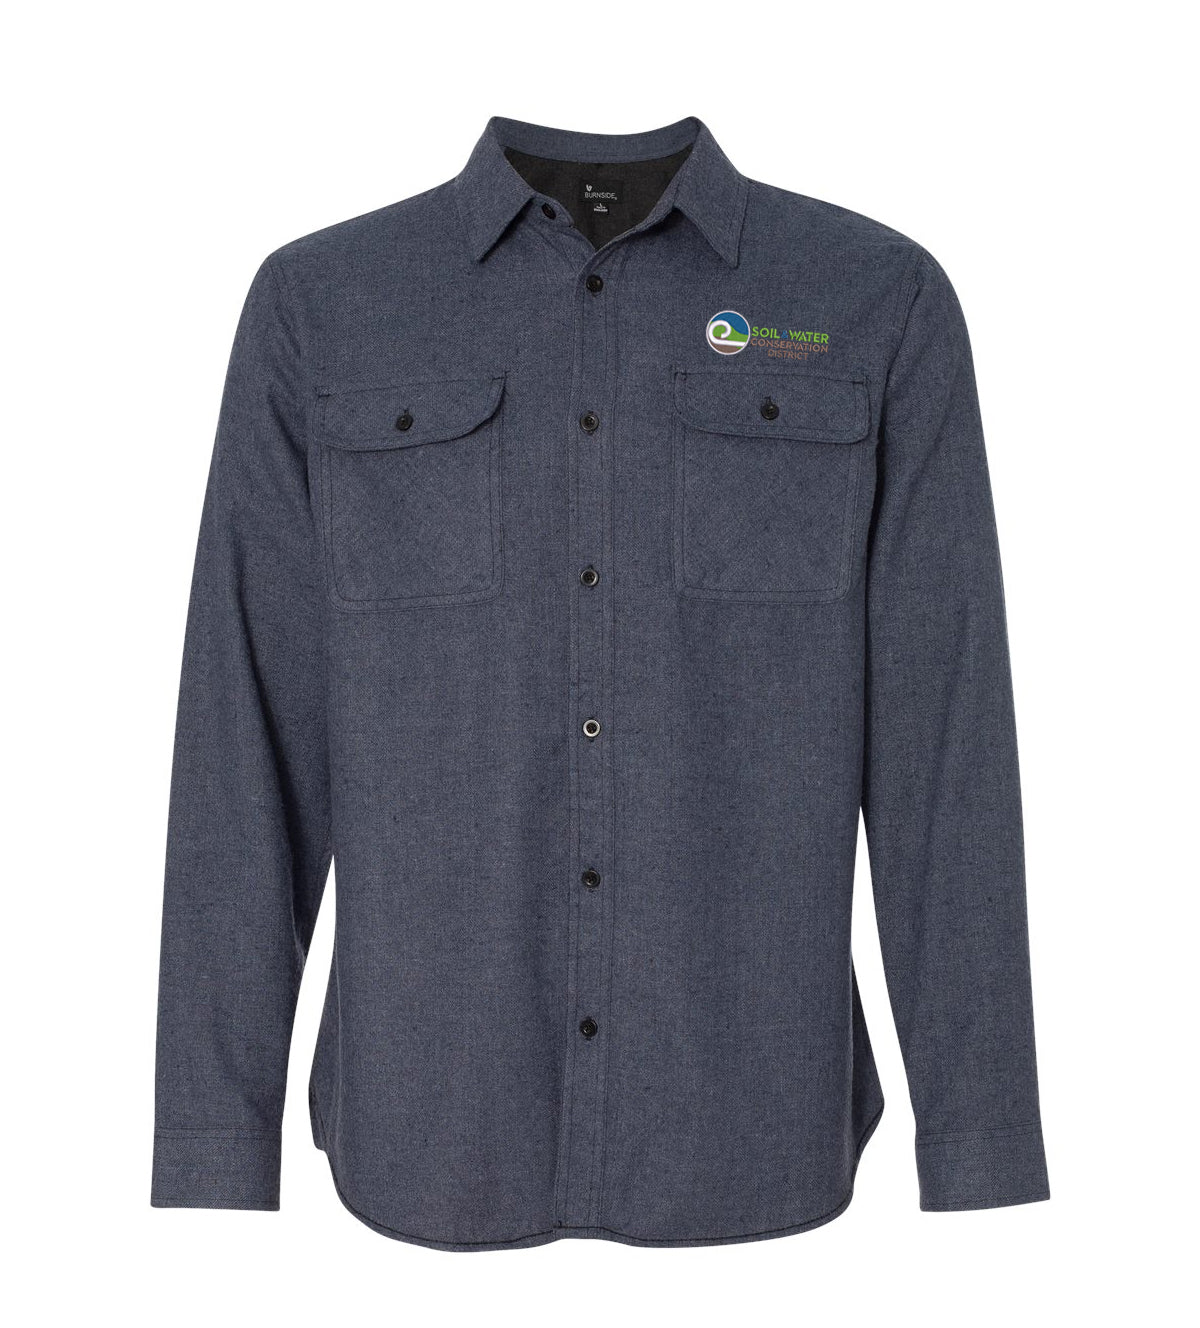 Men's Burnside - Solid Long Sleeve Flannel Shirt - 8200